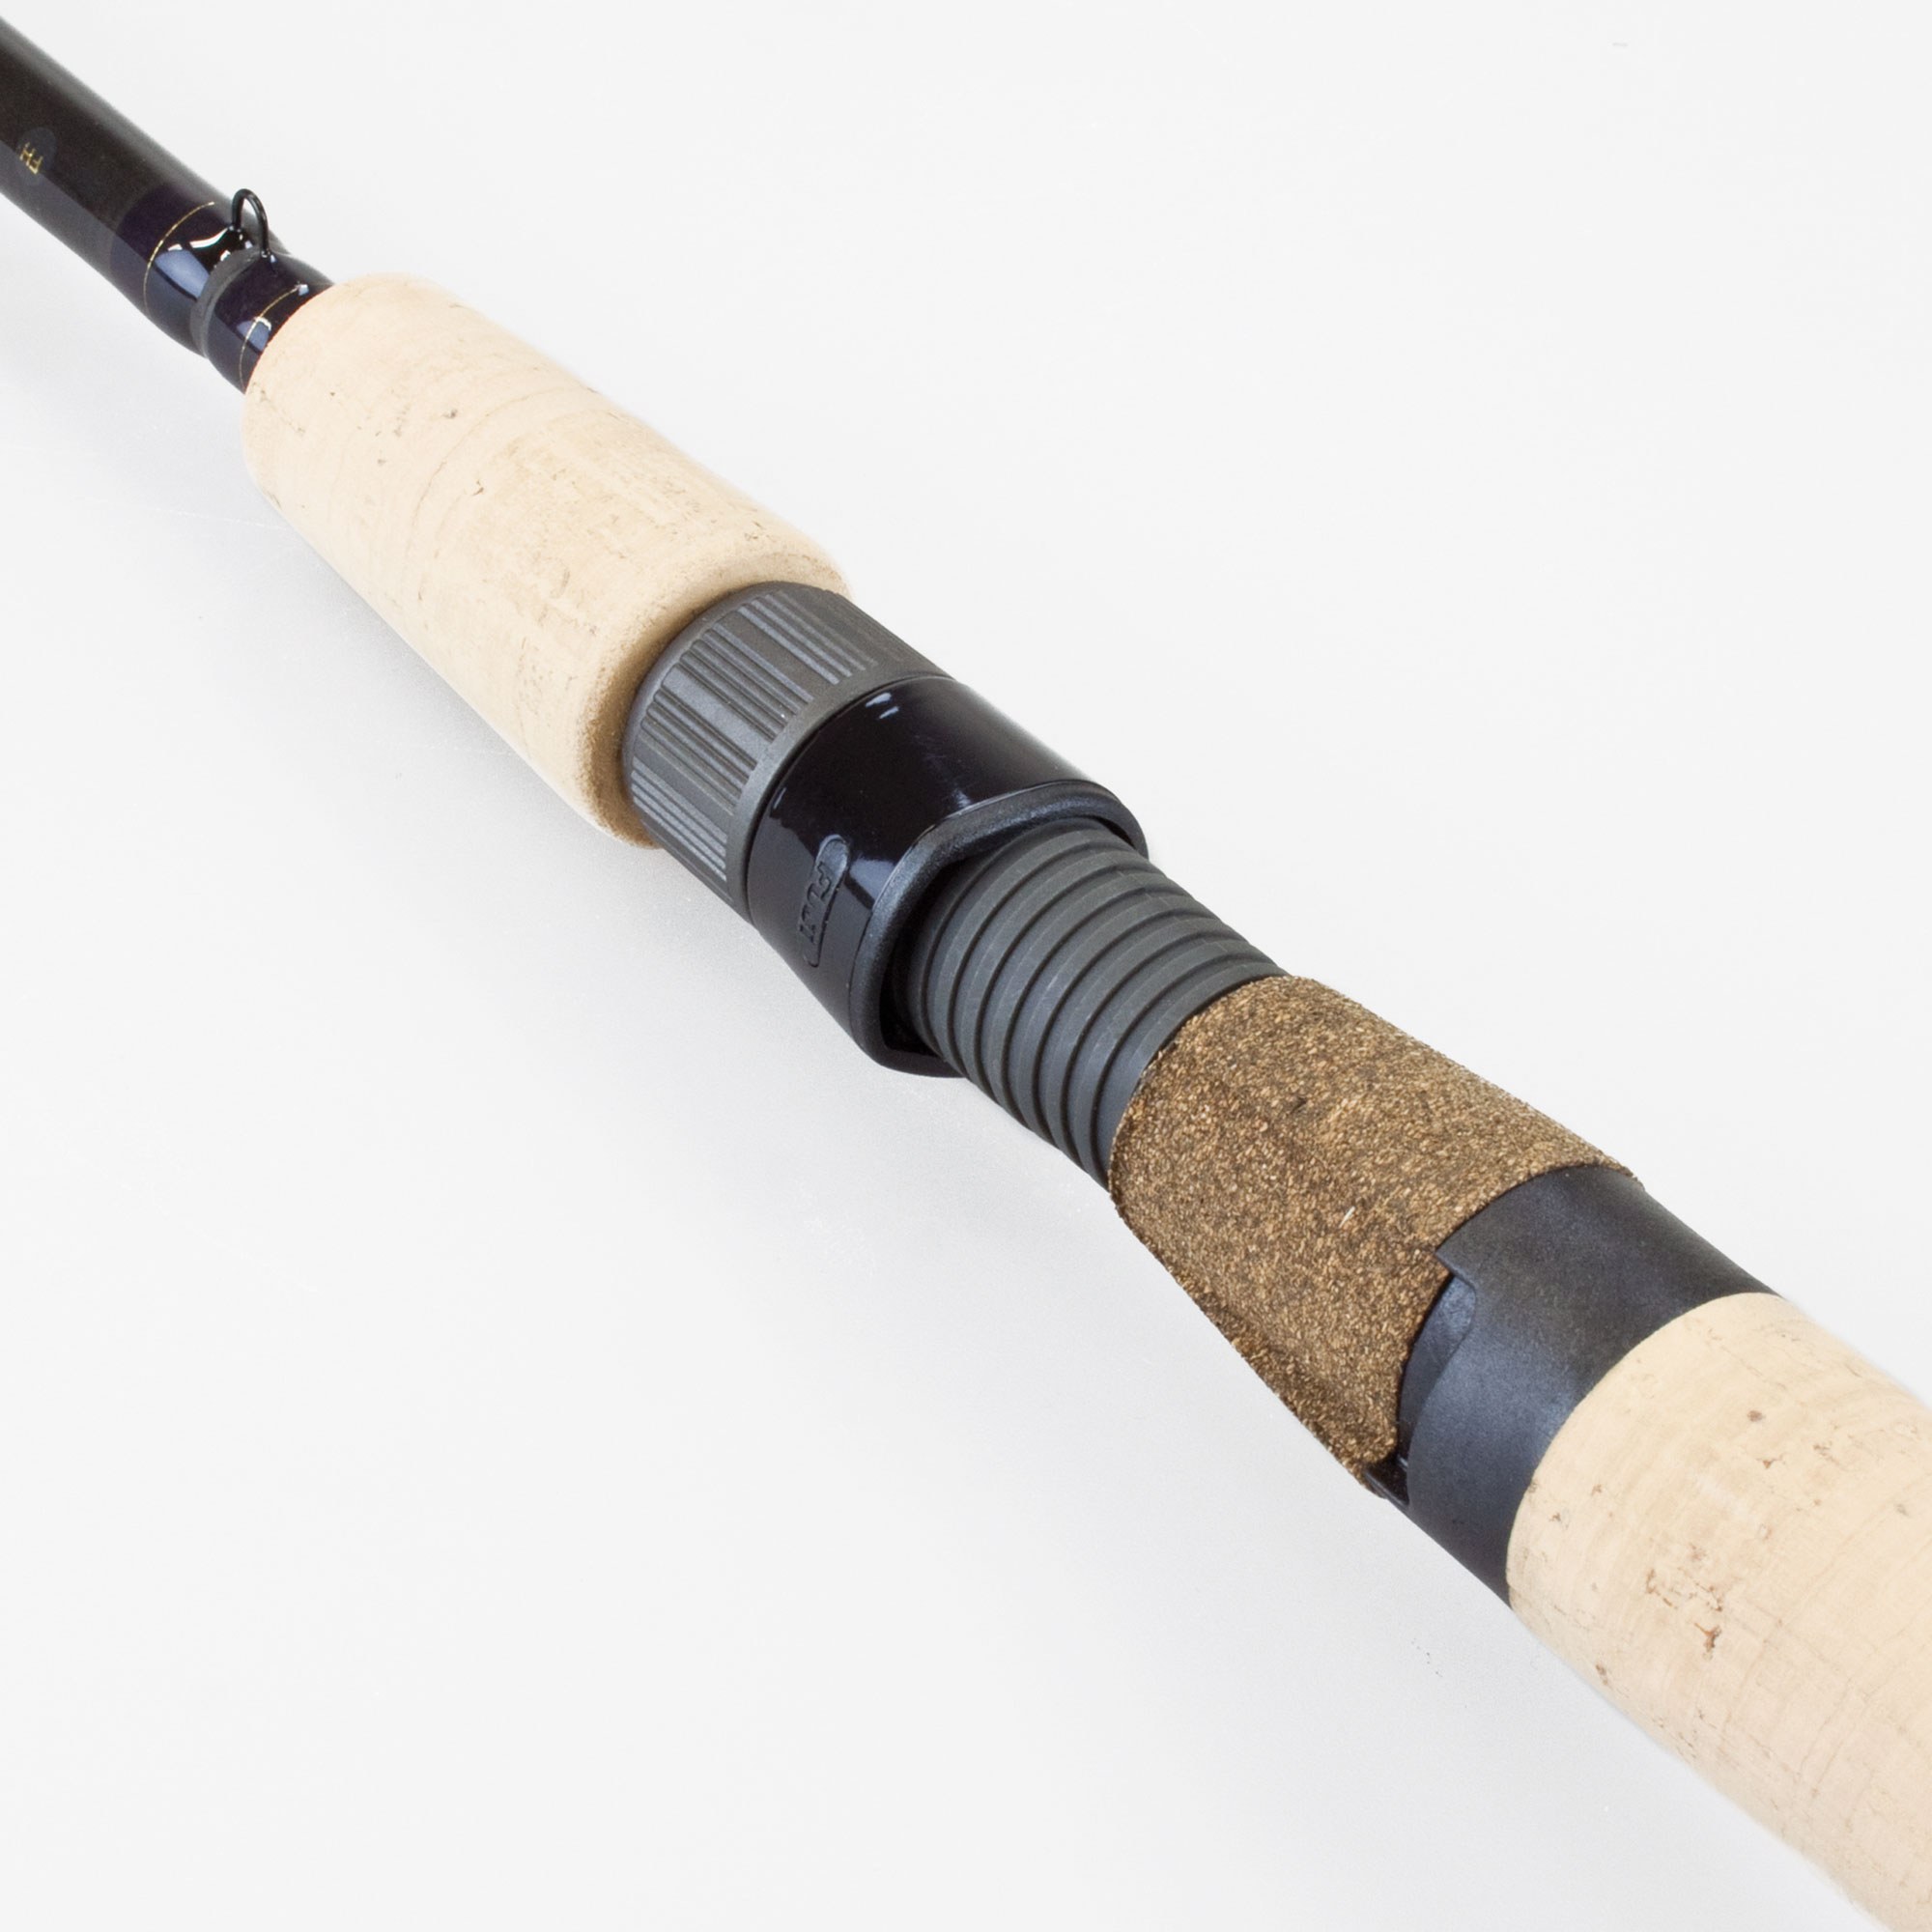 Winn rod grips - Fishing Rods, Reels, Line, and Knots - Bass Fishing Forums